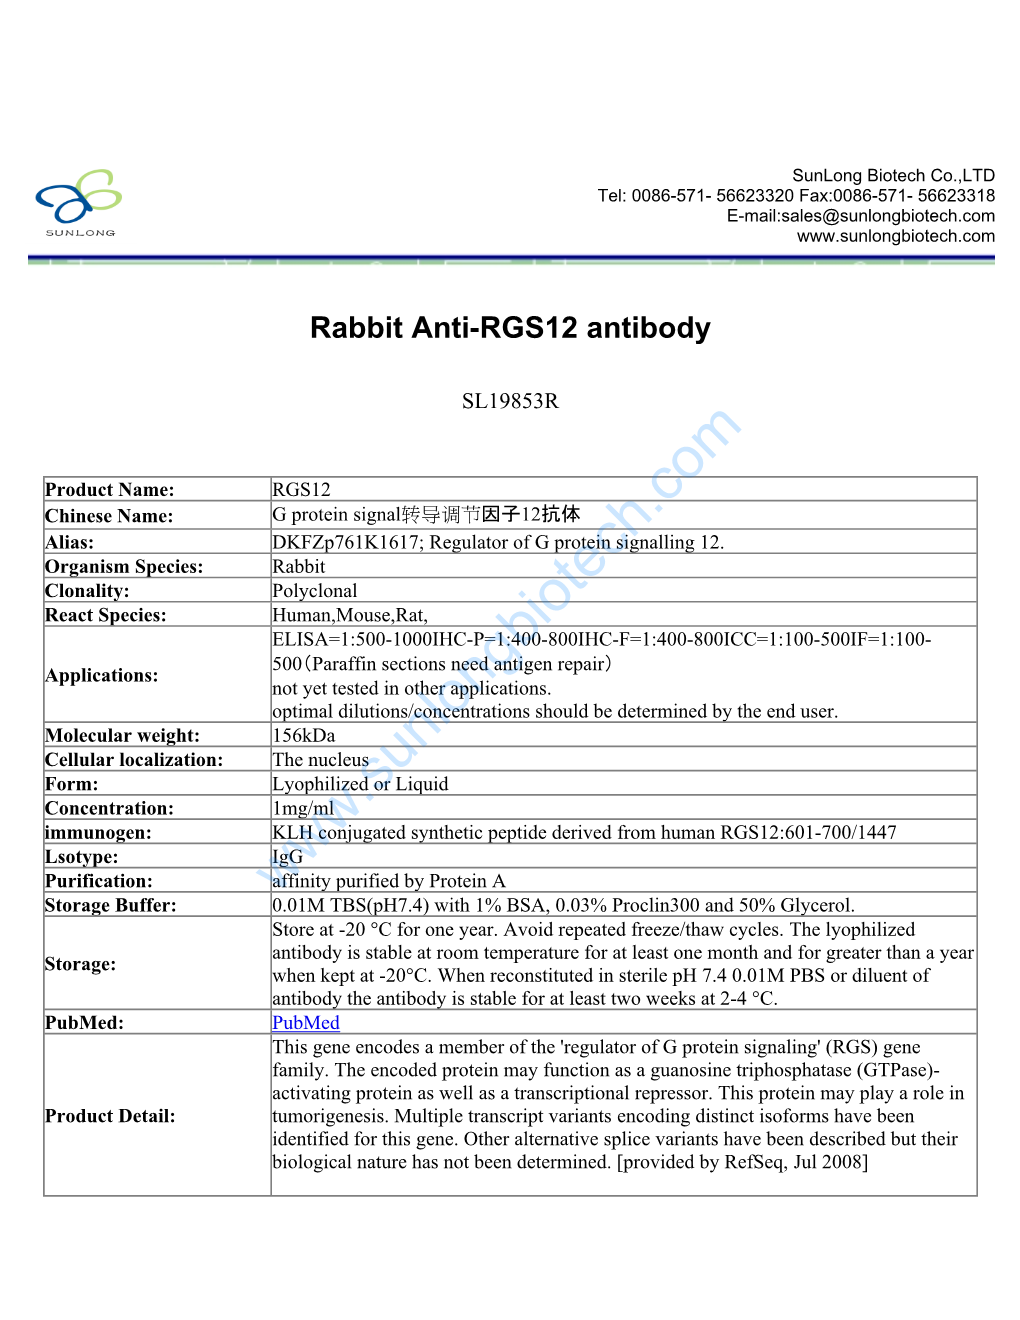 Rabbit Anti-RGS12 Antibody-SL19853R